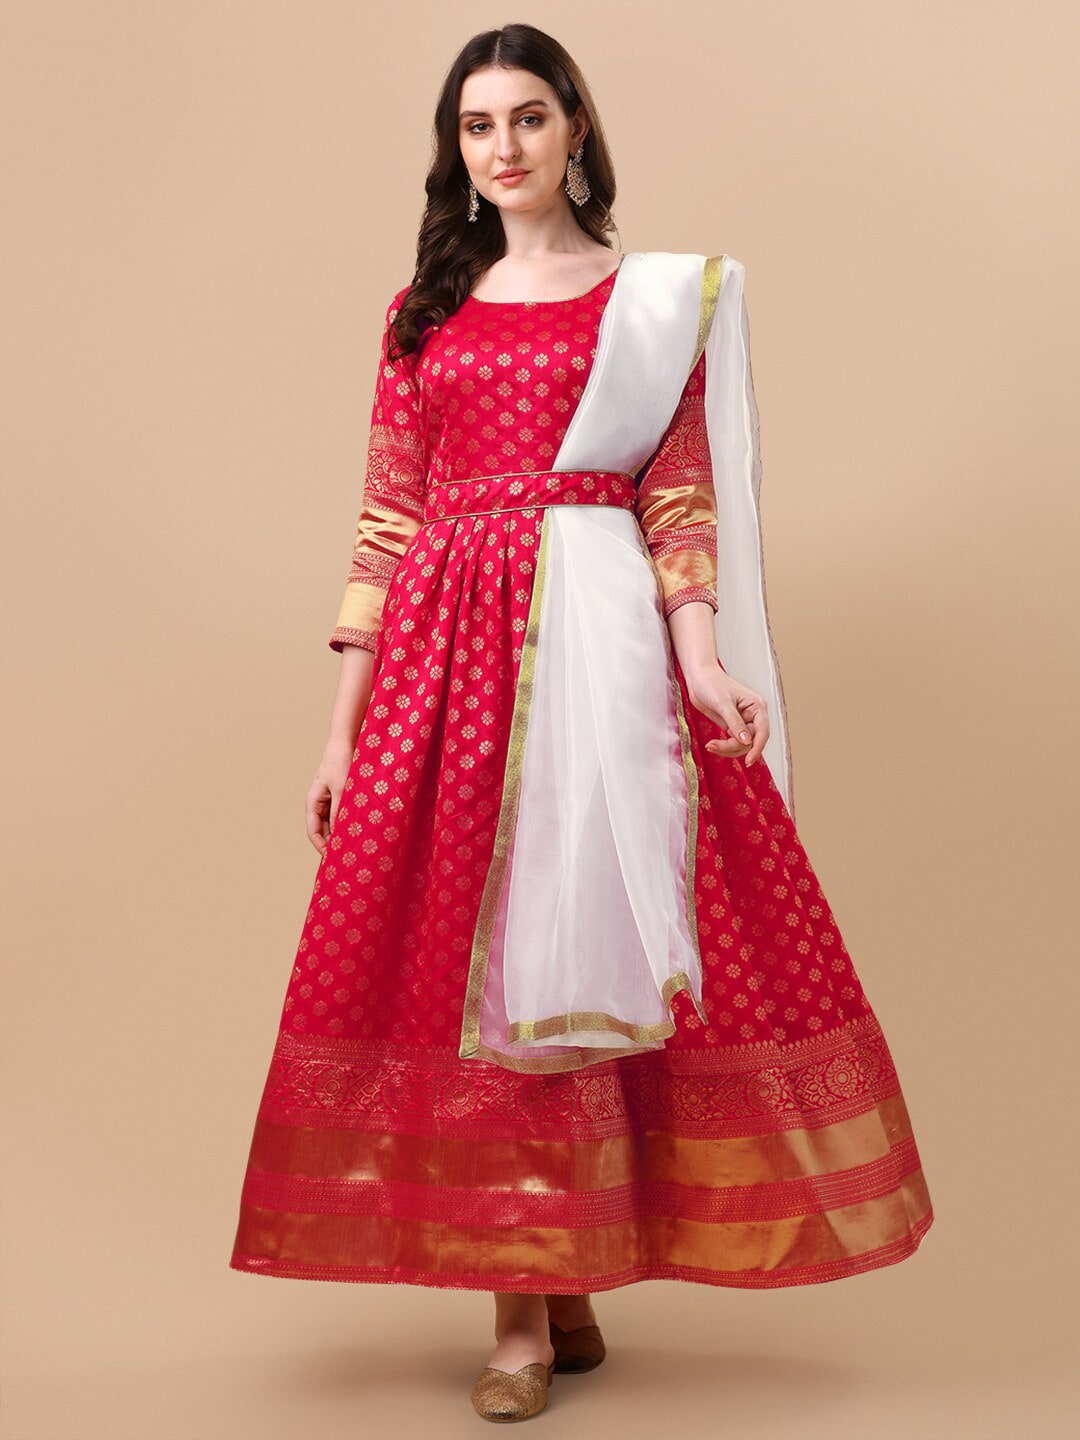 Vidraa Western Store Red Ethnic Motifs Jacquard Maxi Dress Price in India